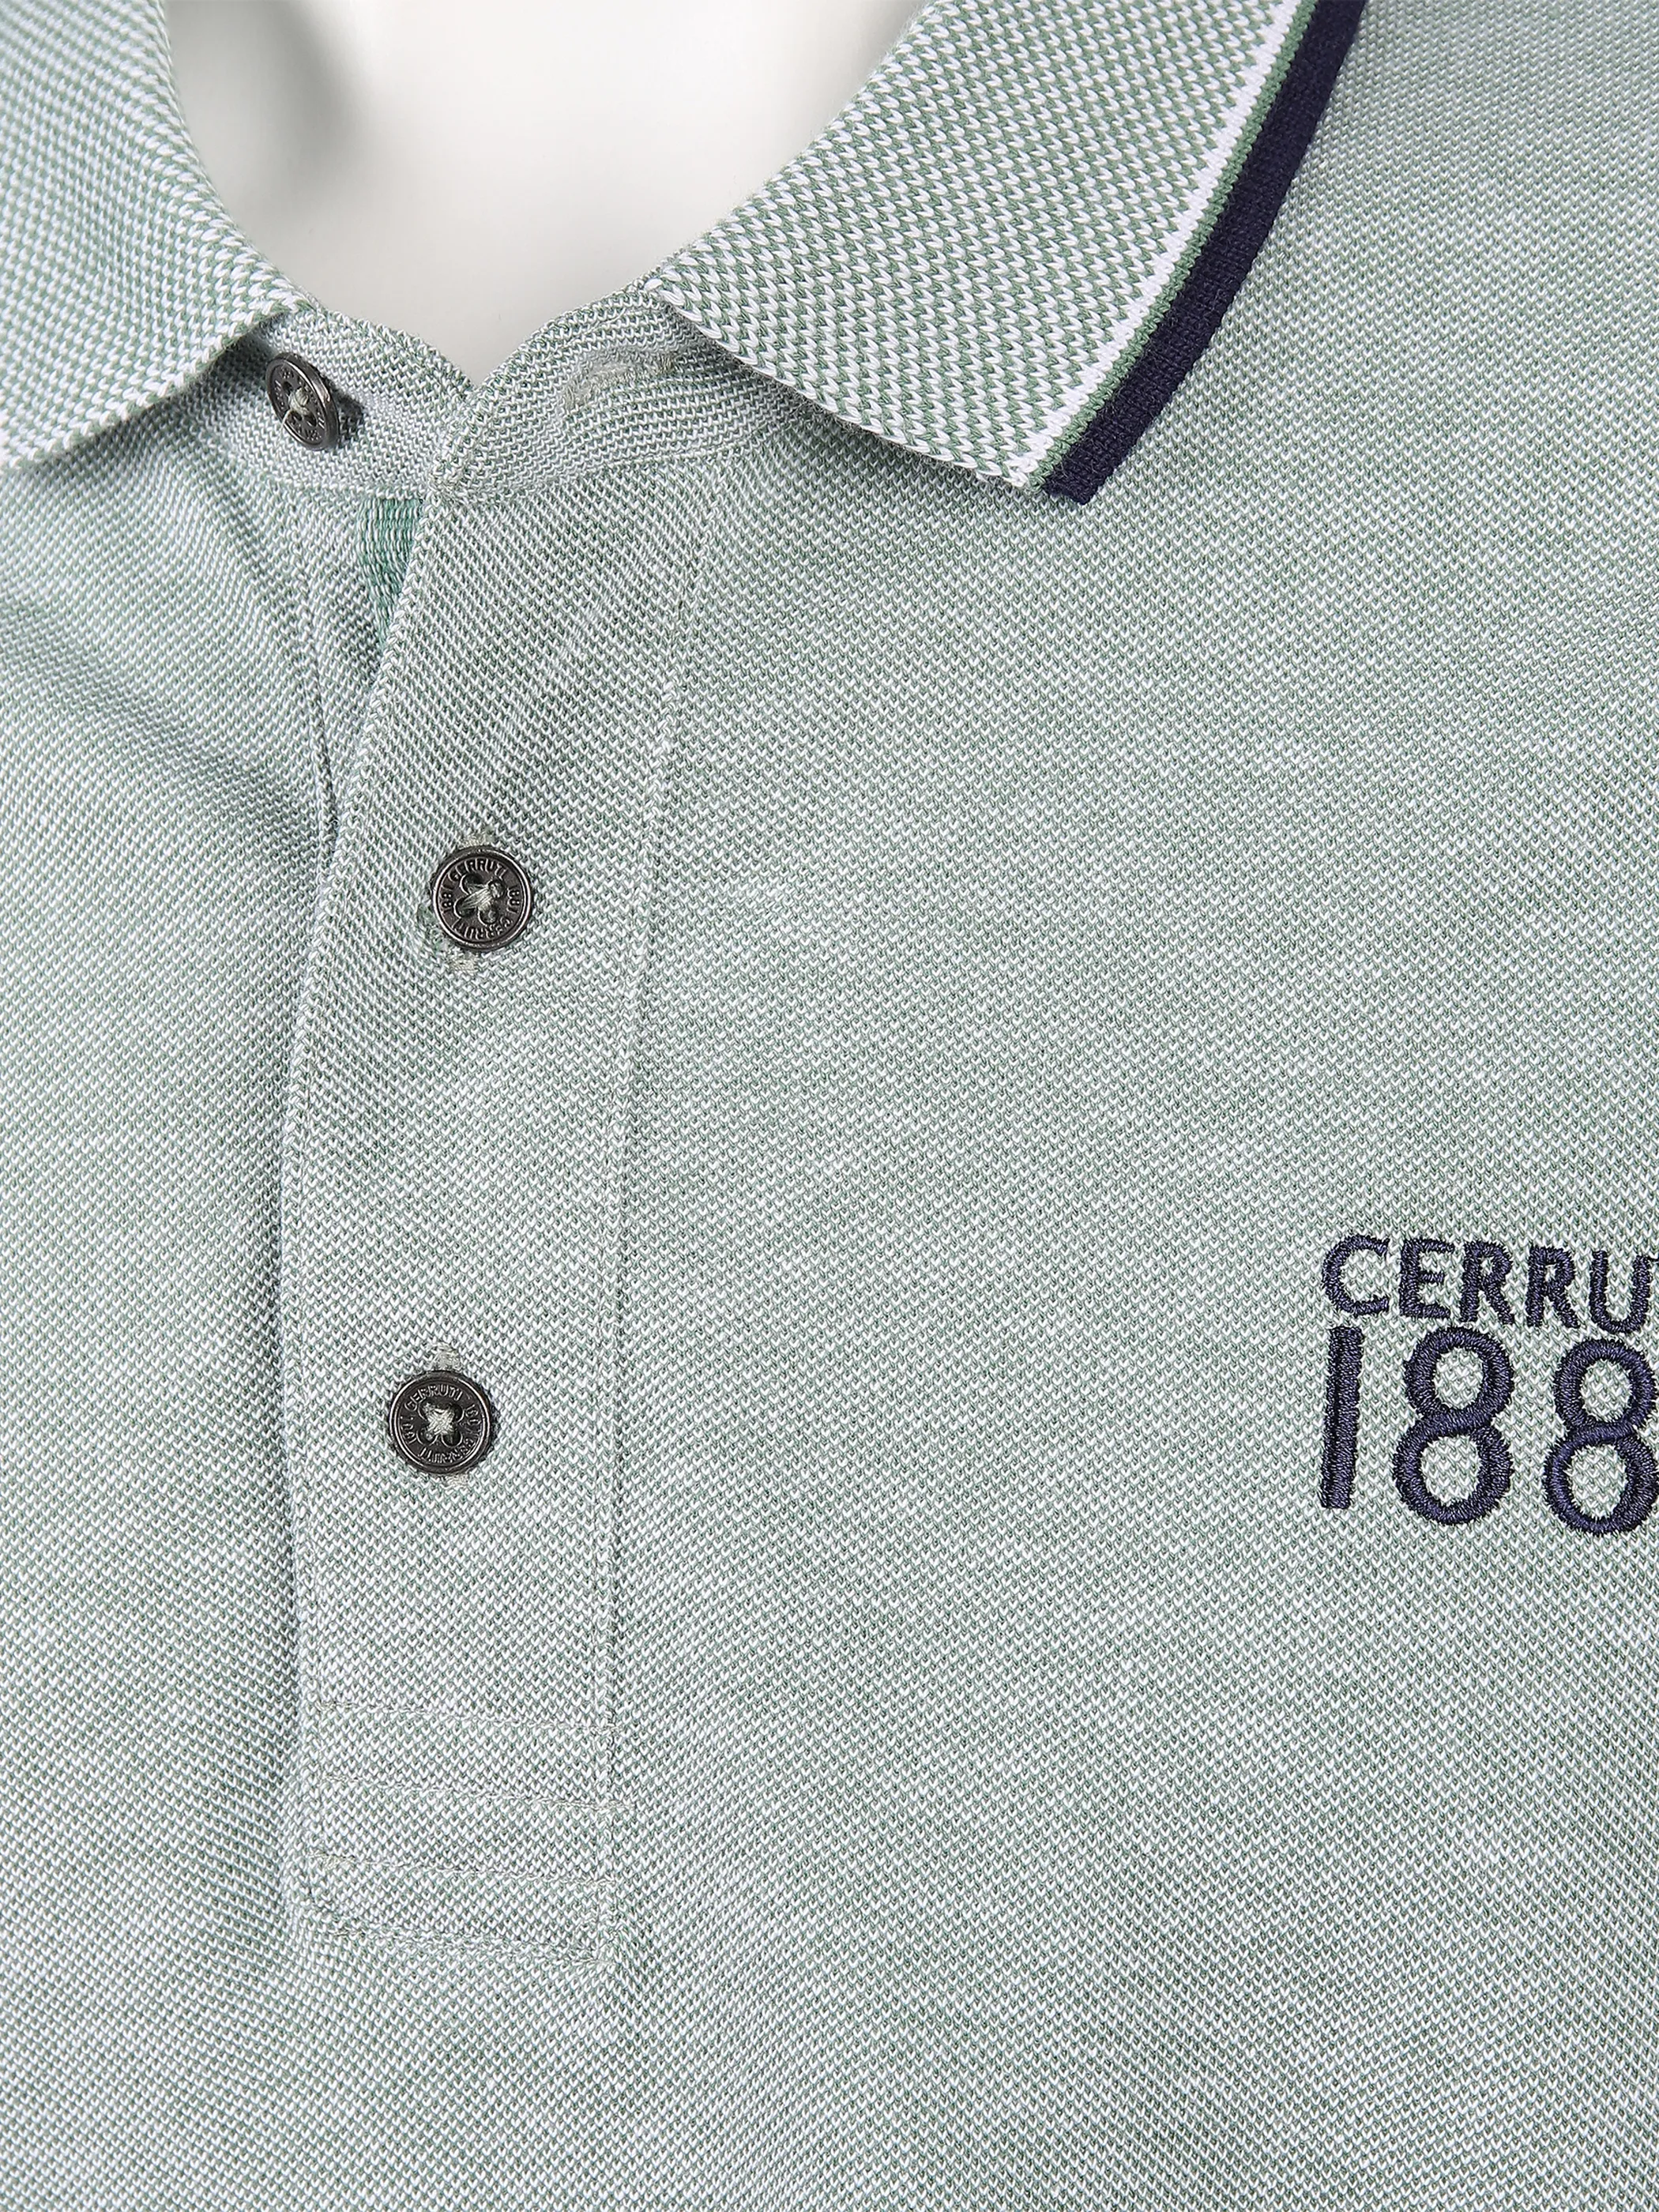 Cerruti 1881 He. Poloshirt 1/2 Arm twisted Grün 834101 MINT 3